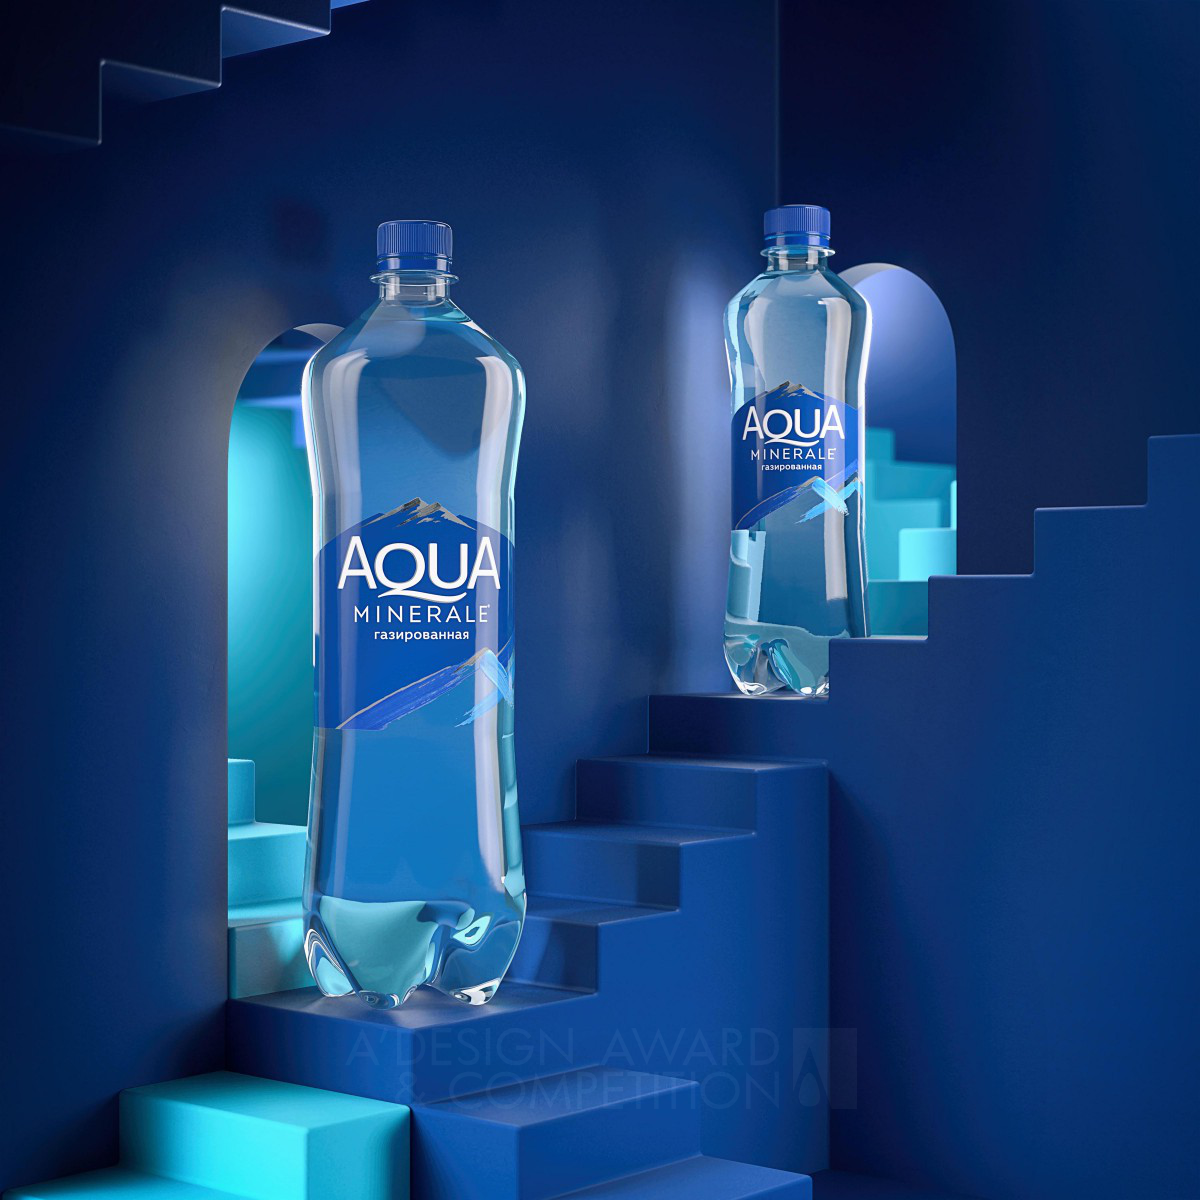 Aqua Minerale Redesign by PepsiCo Design &amp; Innovation